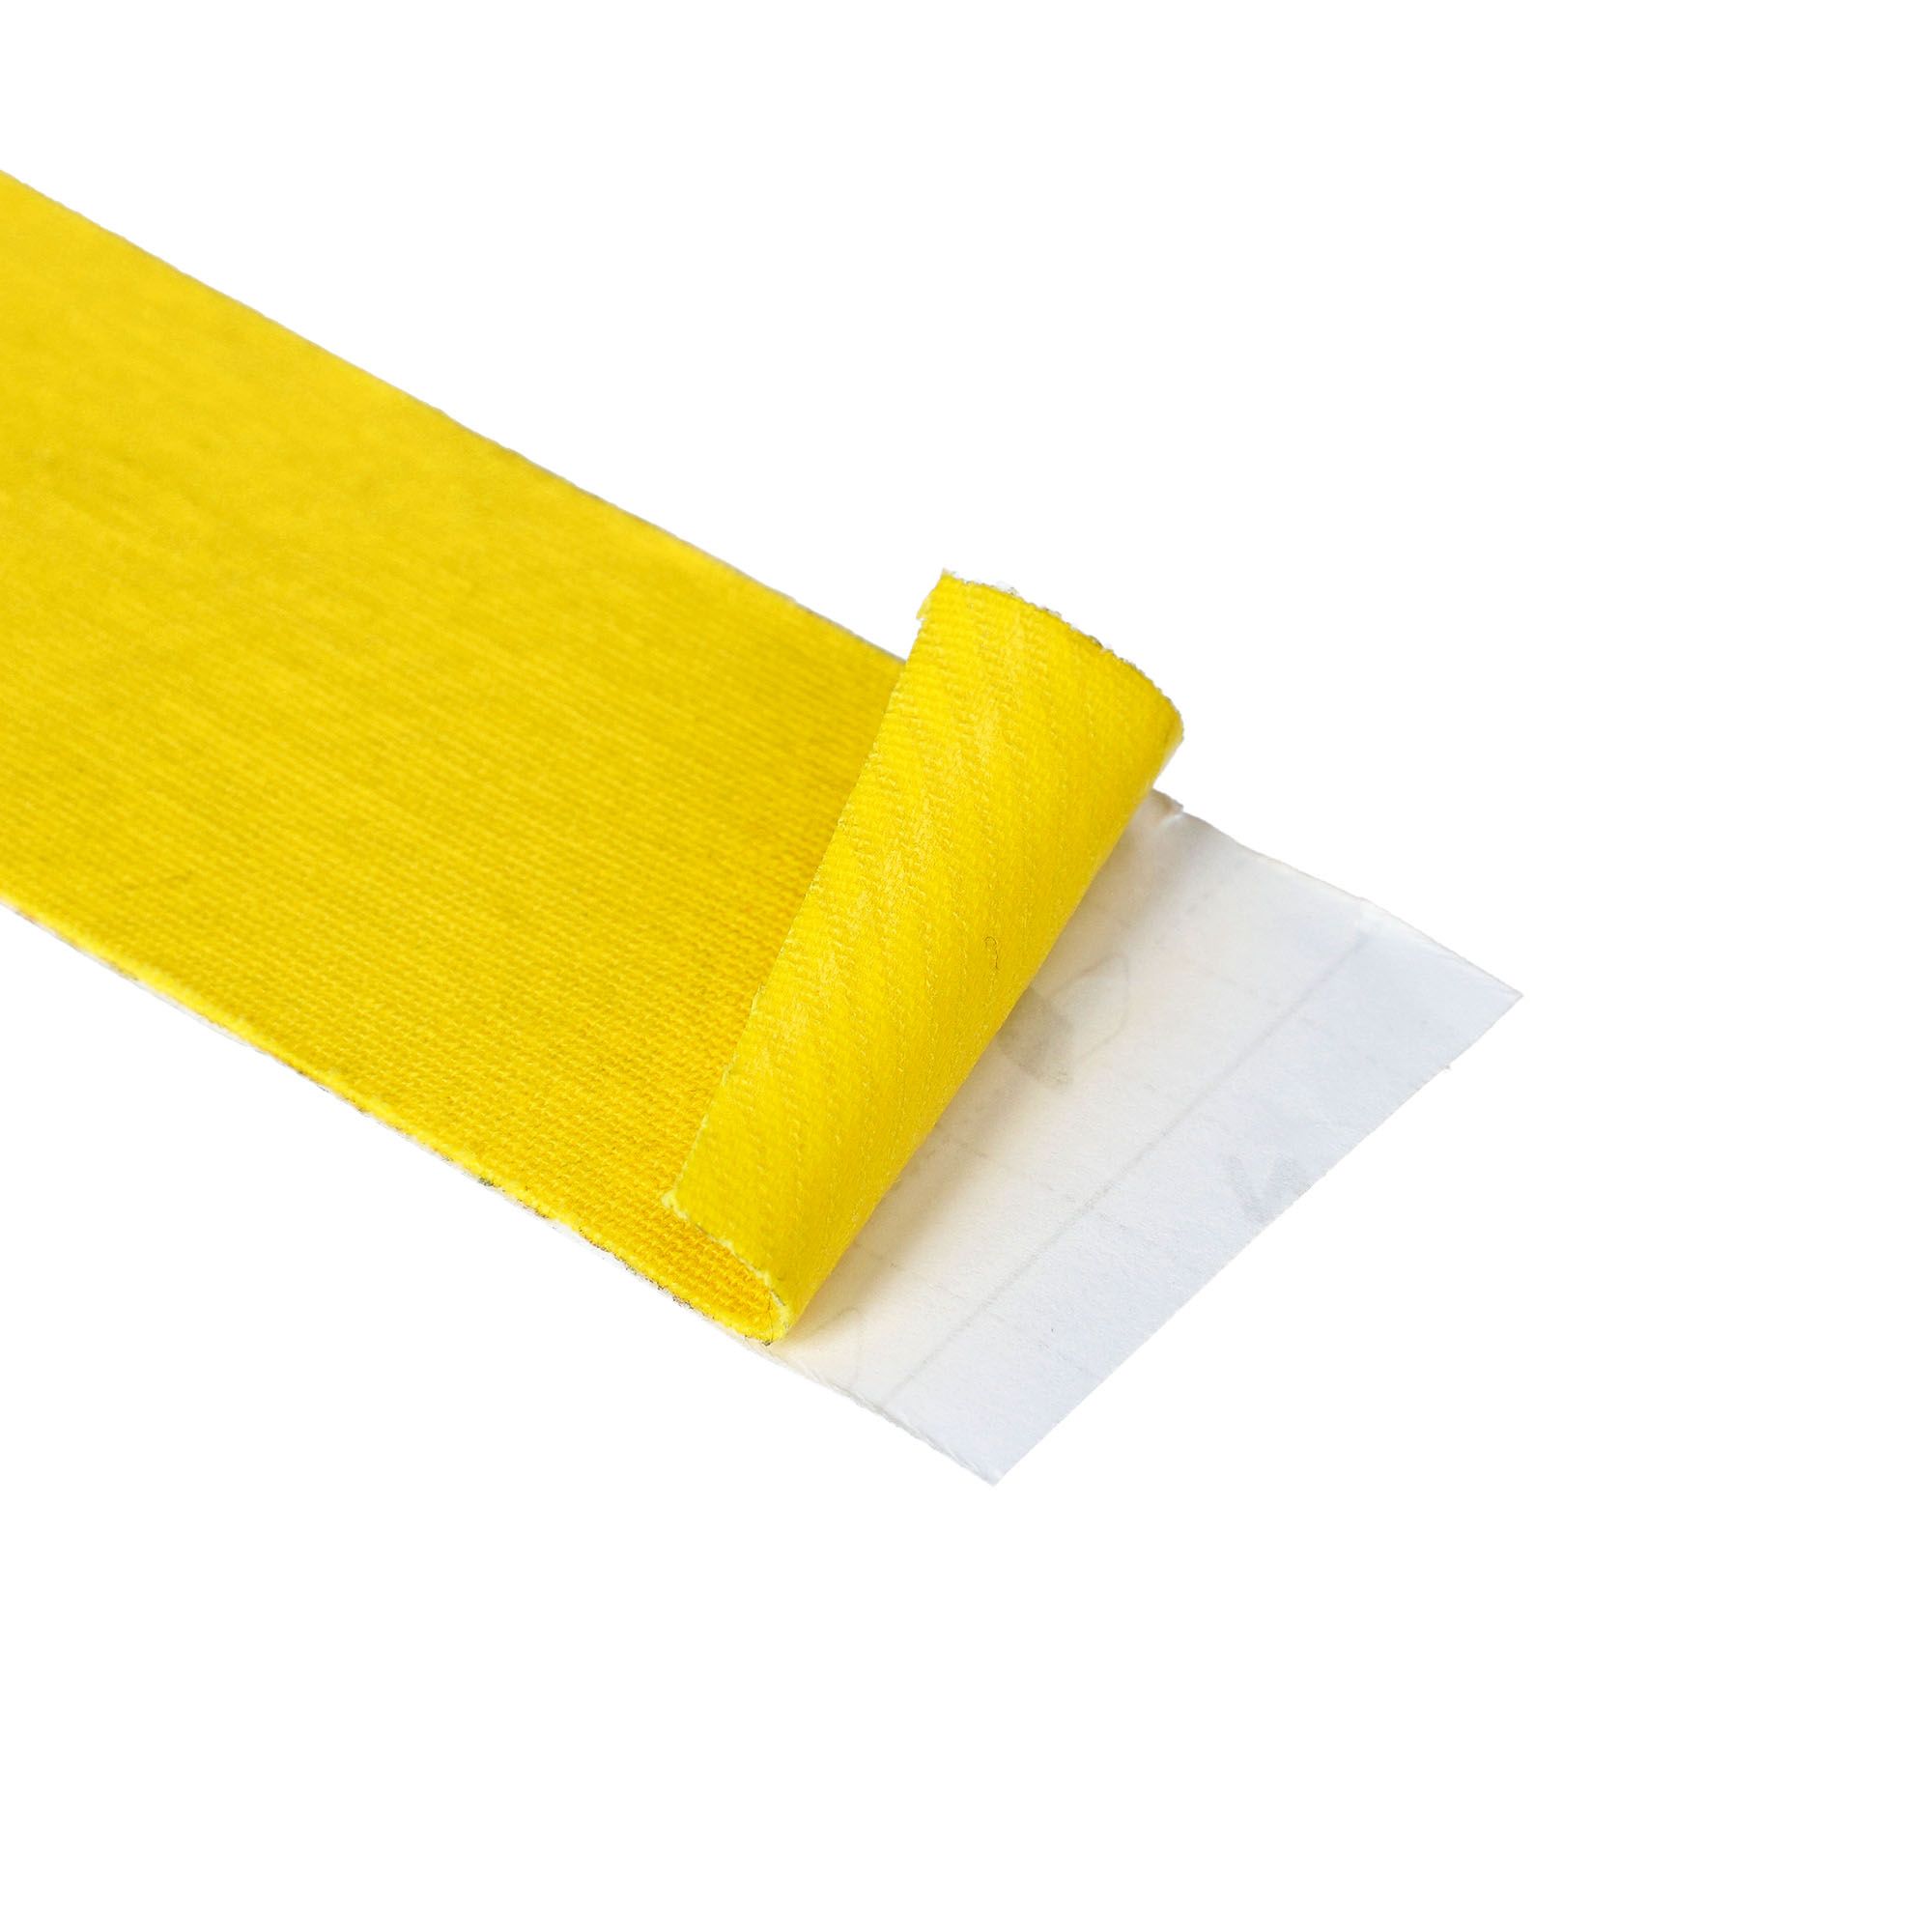 Taśma do kinesiotapingu yellowTAPE - żółta, 5cm x 5m